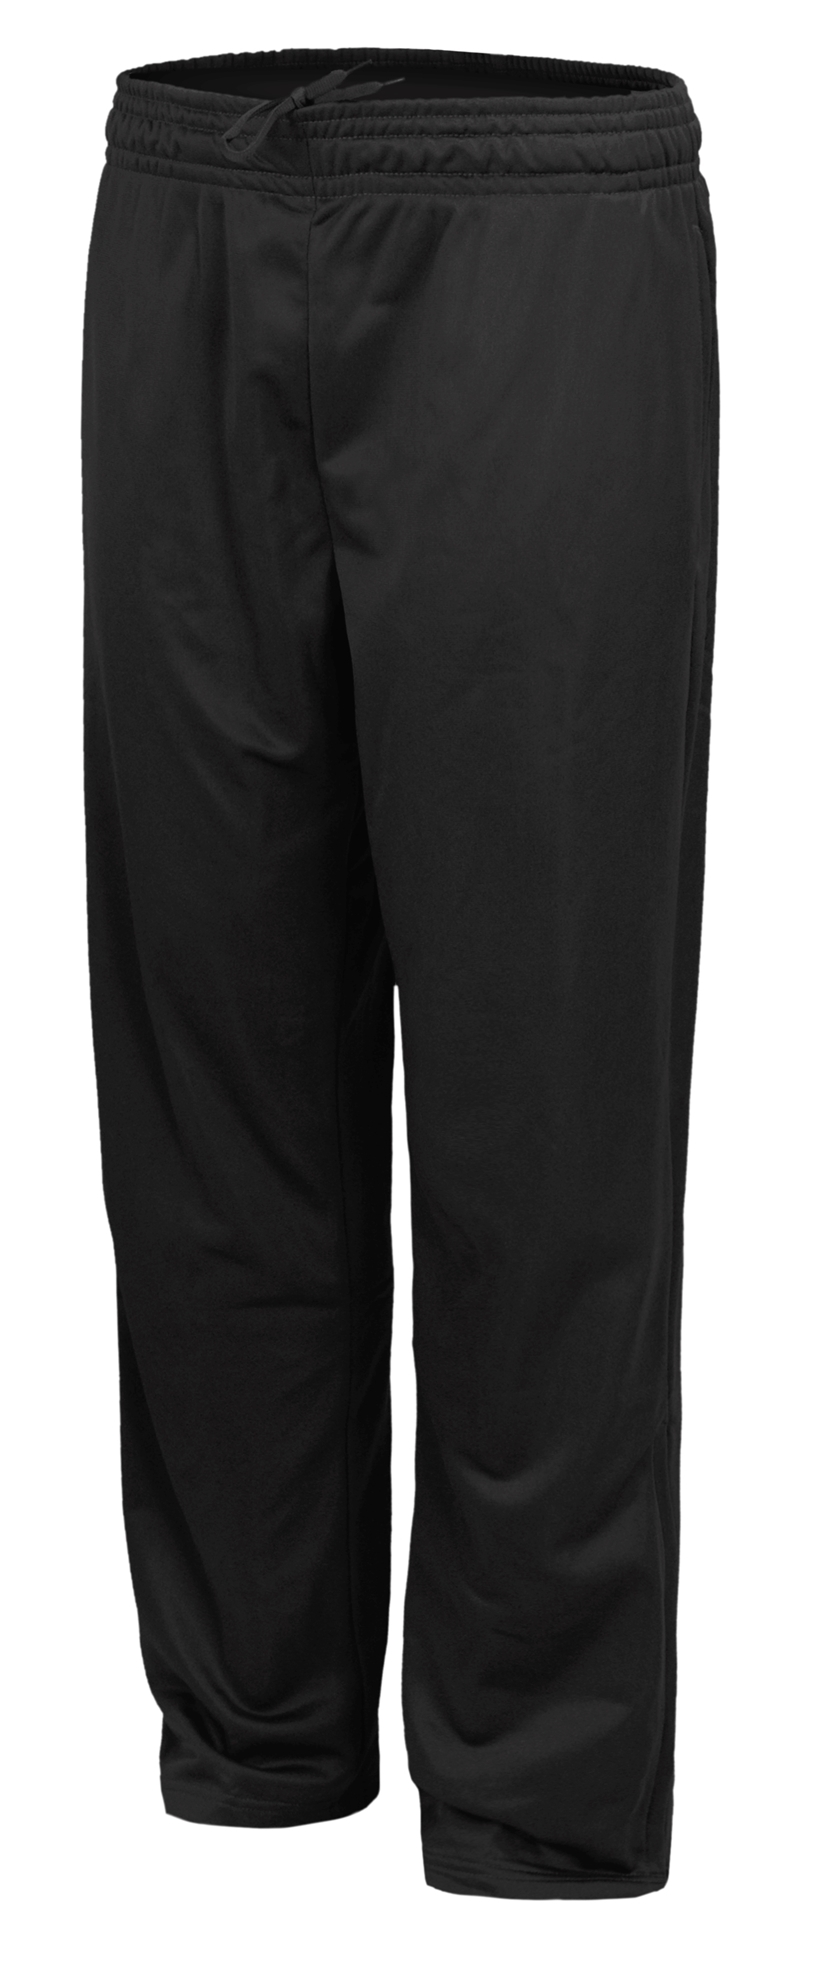 BAW Athletic Wear F110 - Adult Fleece Pant